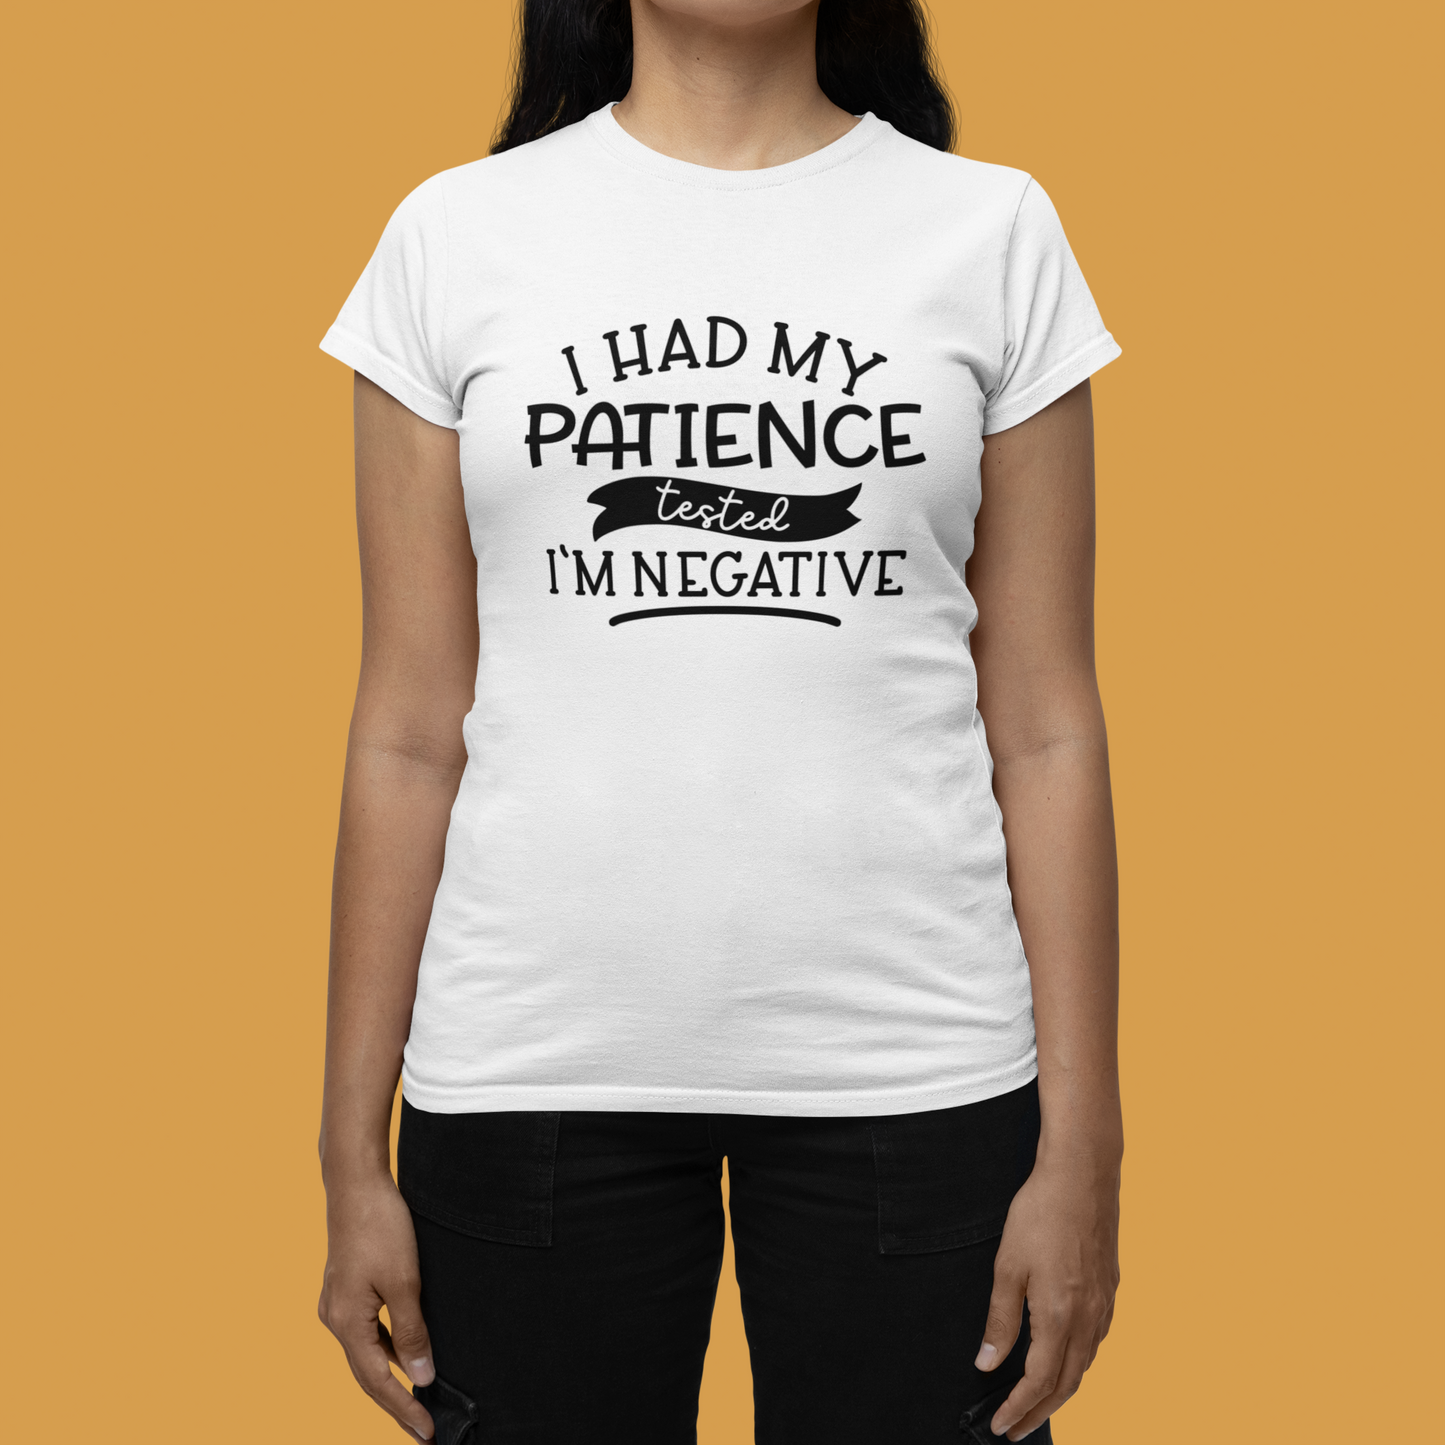 Patience Humor - Women's Softstyle Tee